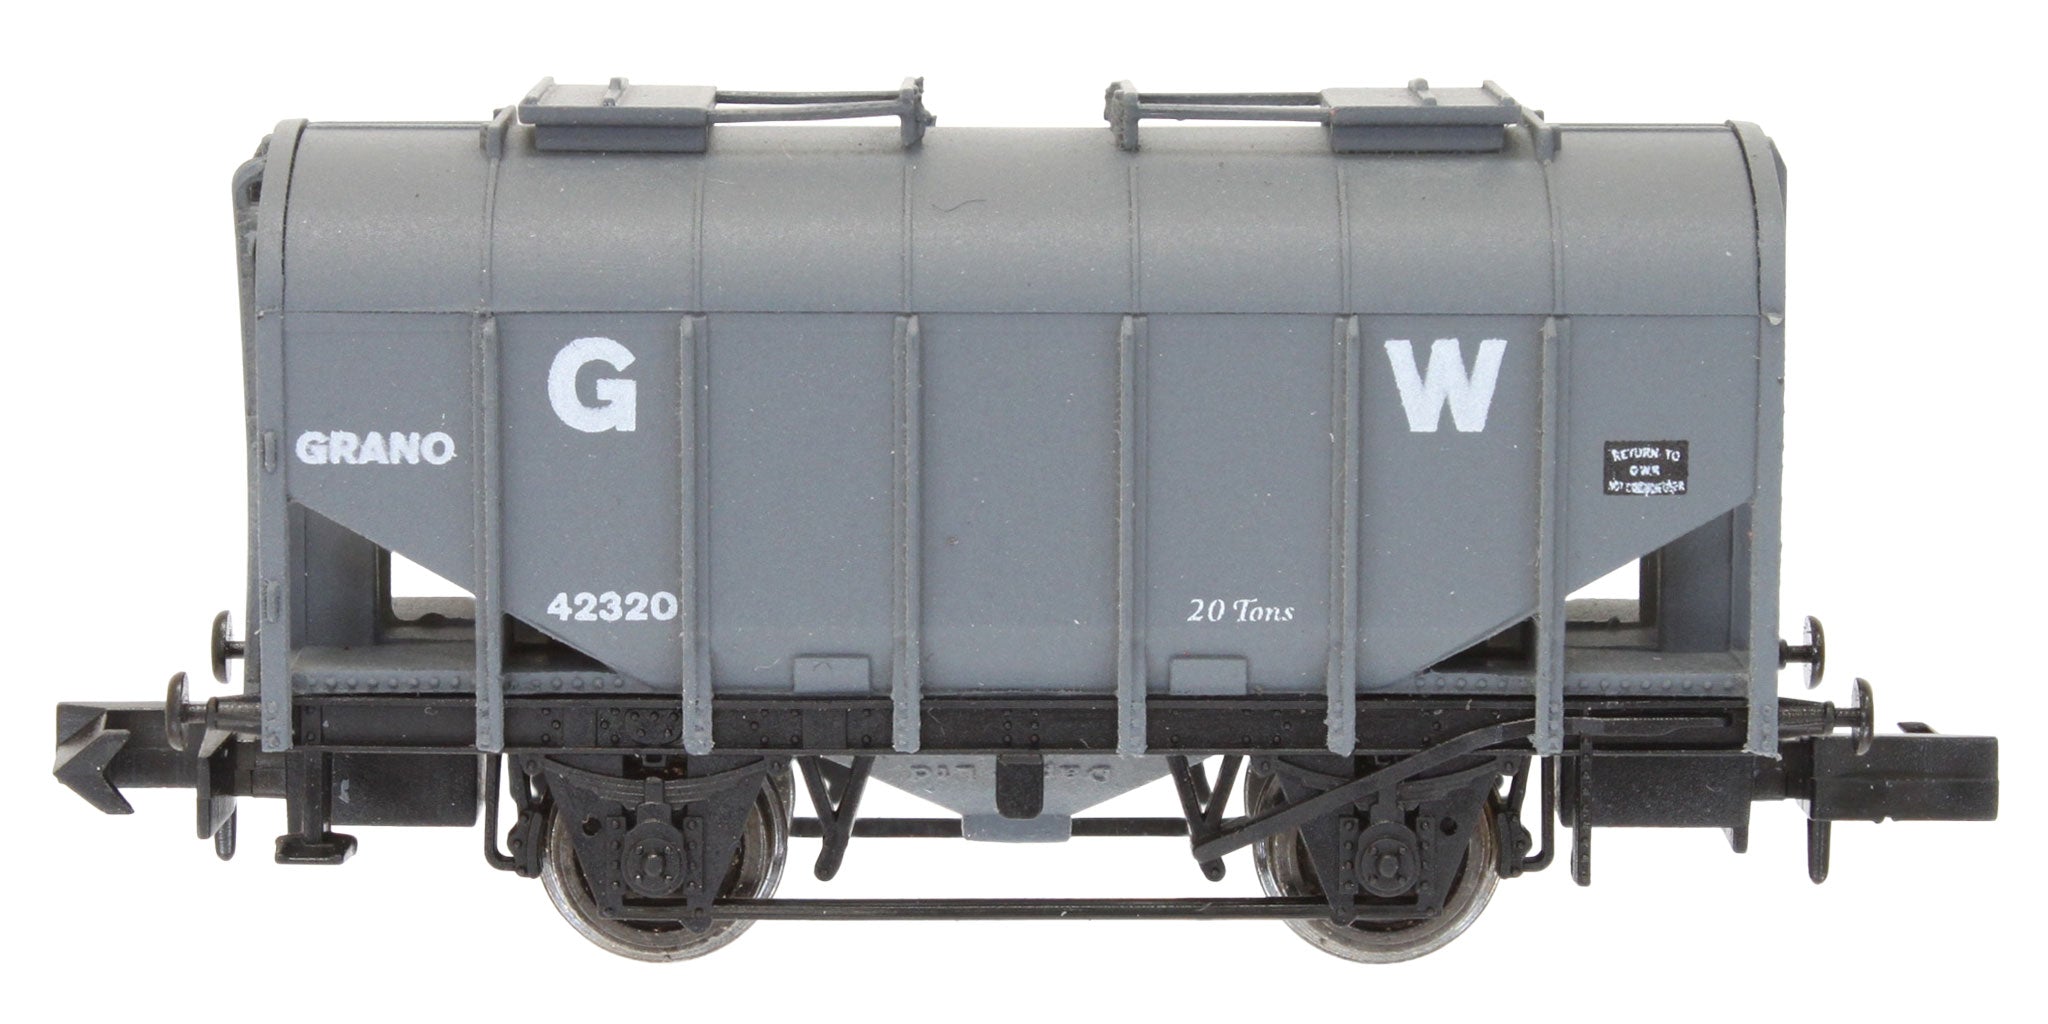 2F-036-051 N Gauge Bulk Grain Hopper GWR42320